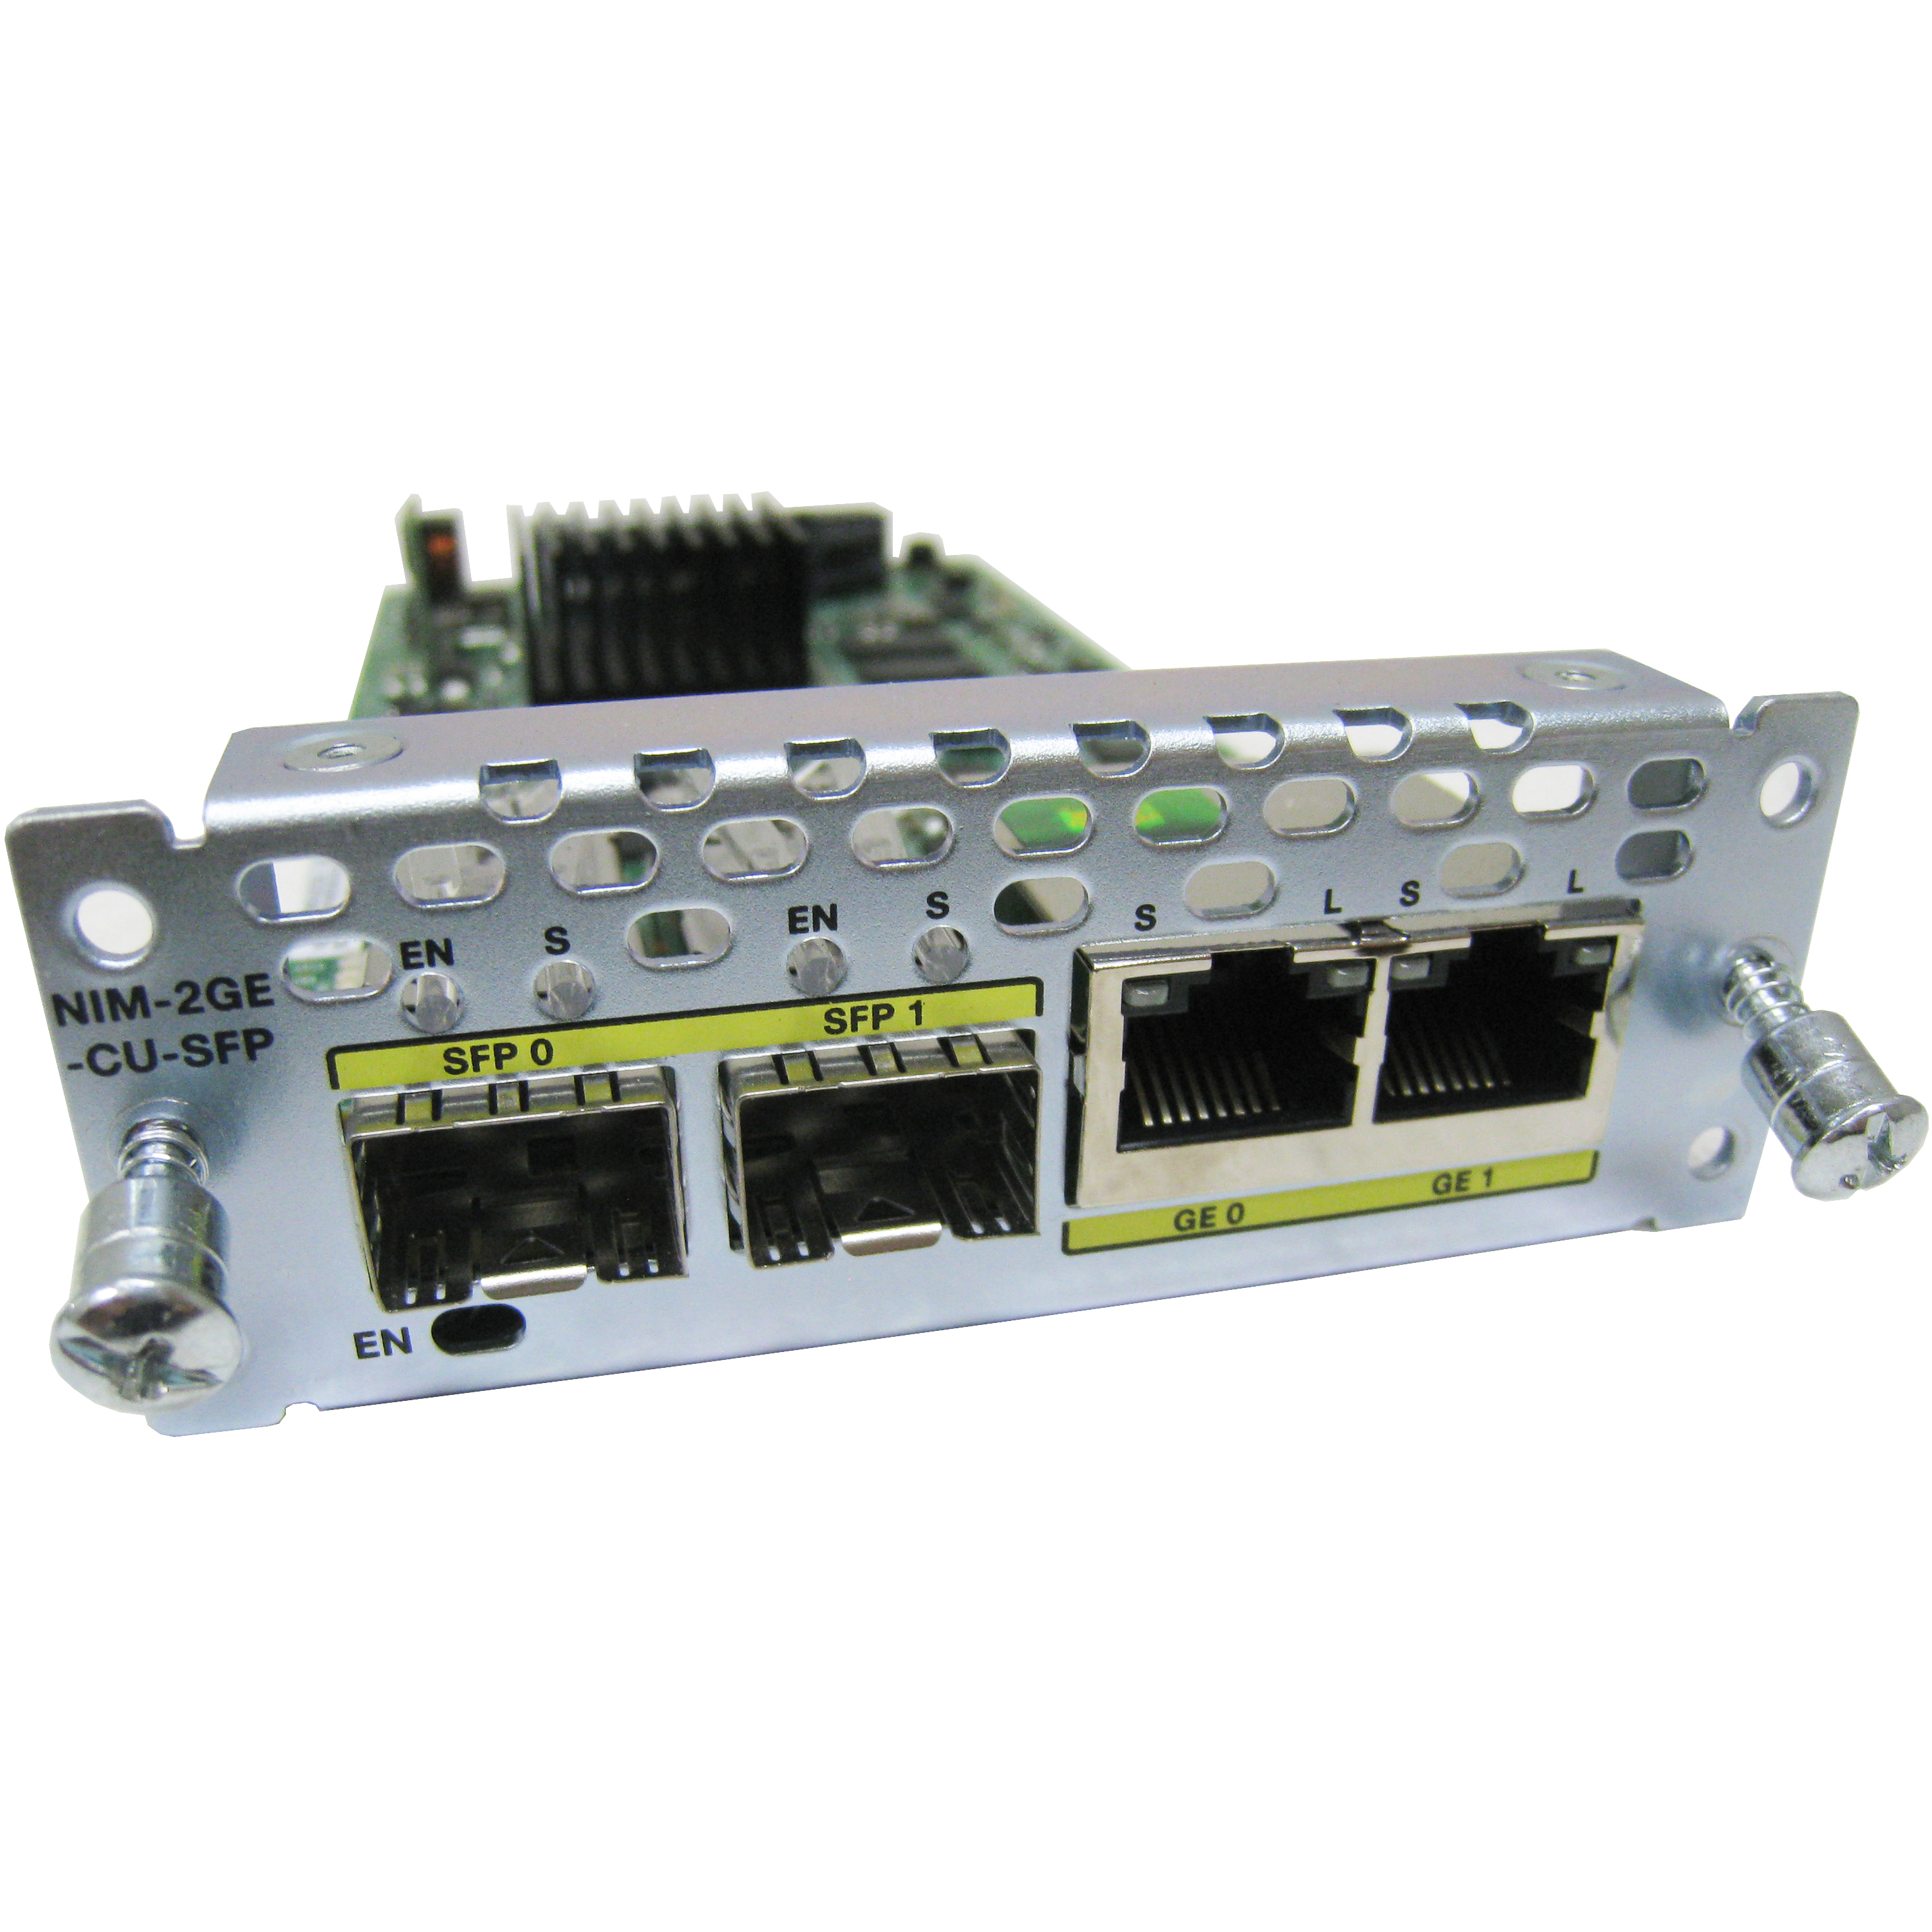 Cisco NIM-2GE-CU-SFP